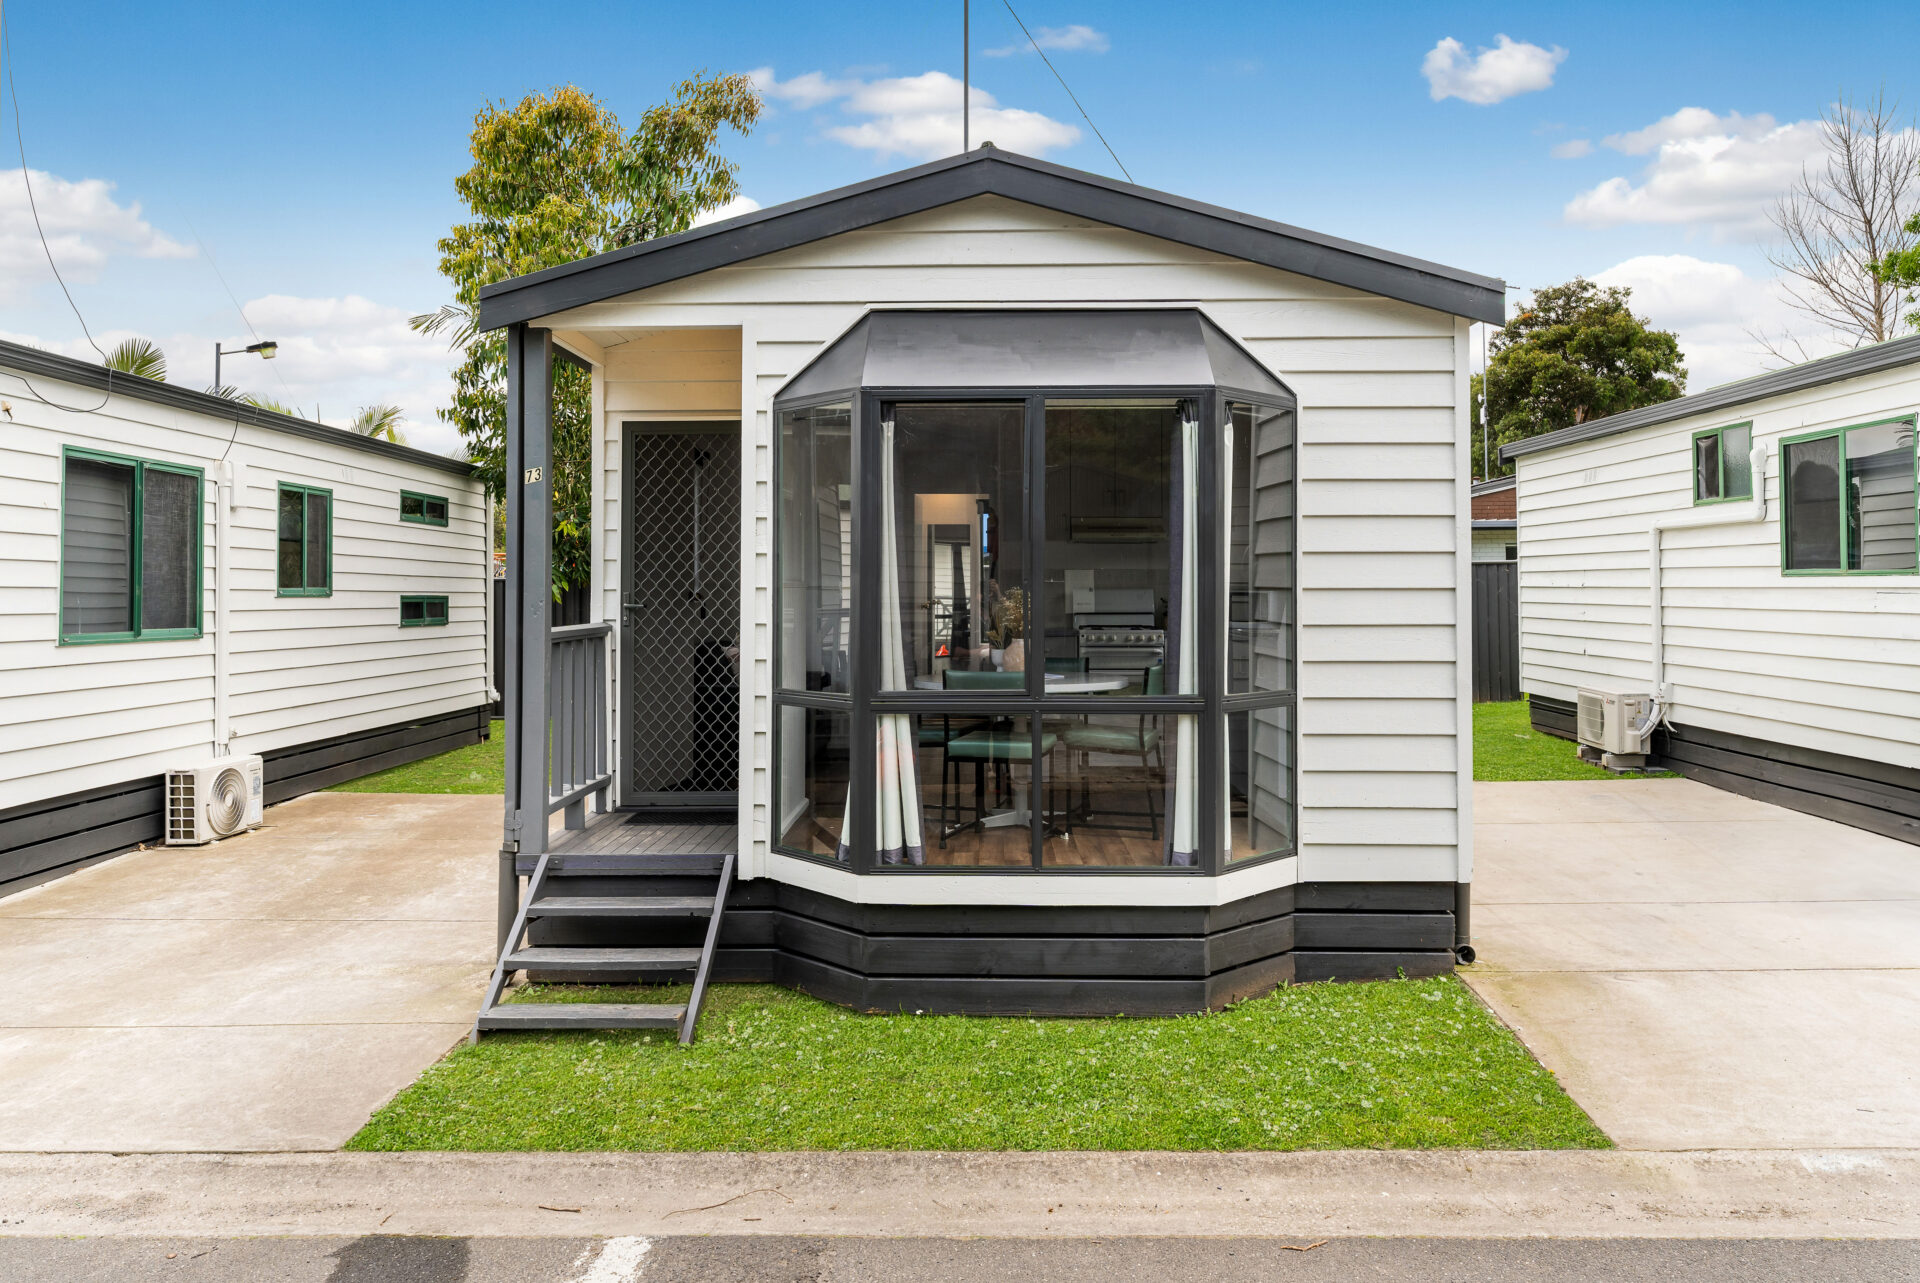 Exterior of 2 bedroom budget cabin | Tasman Holiday Parks Geelong